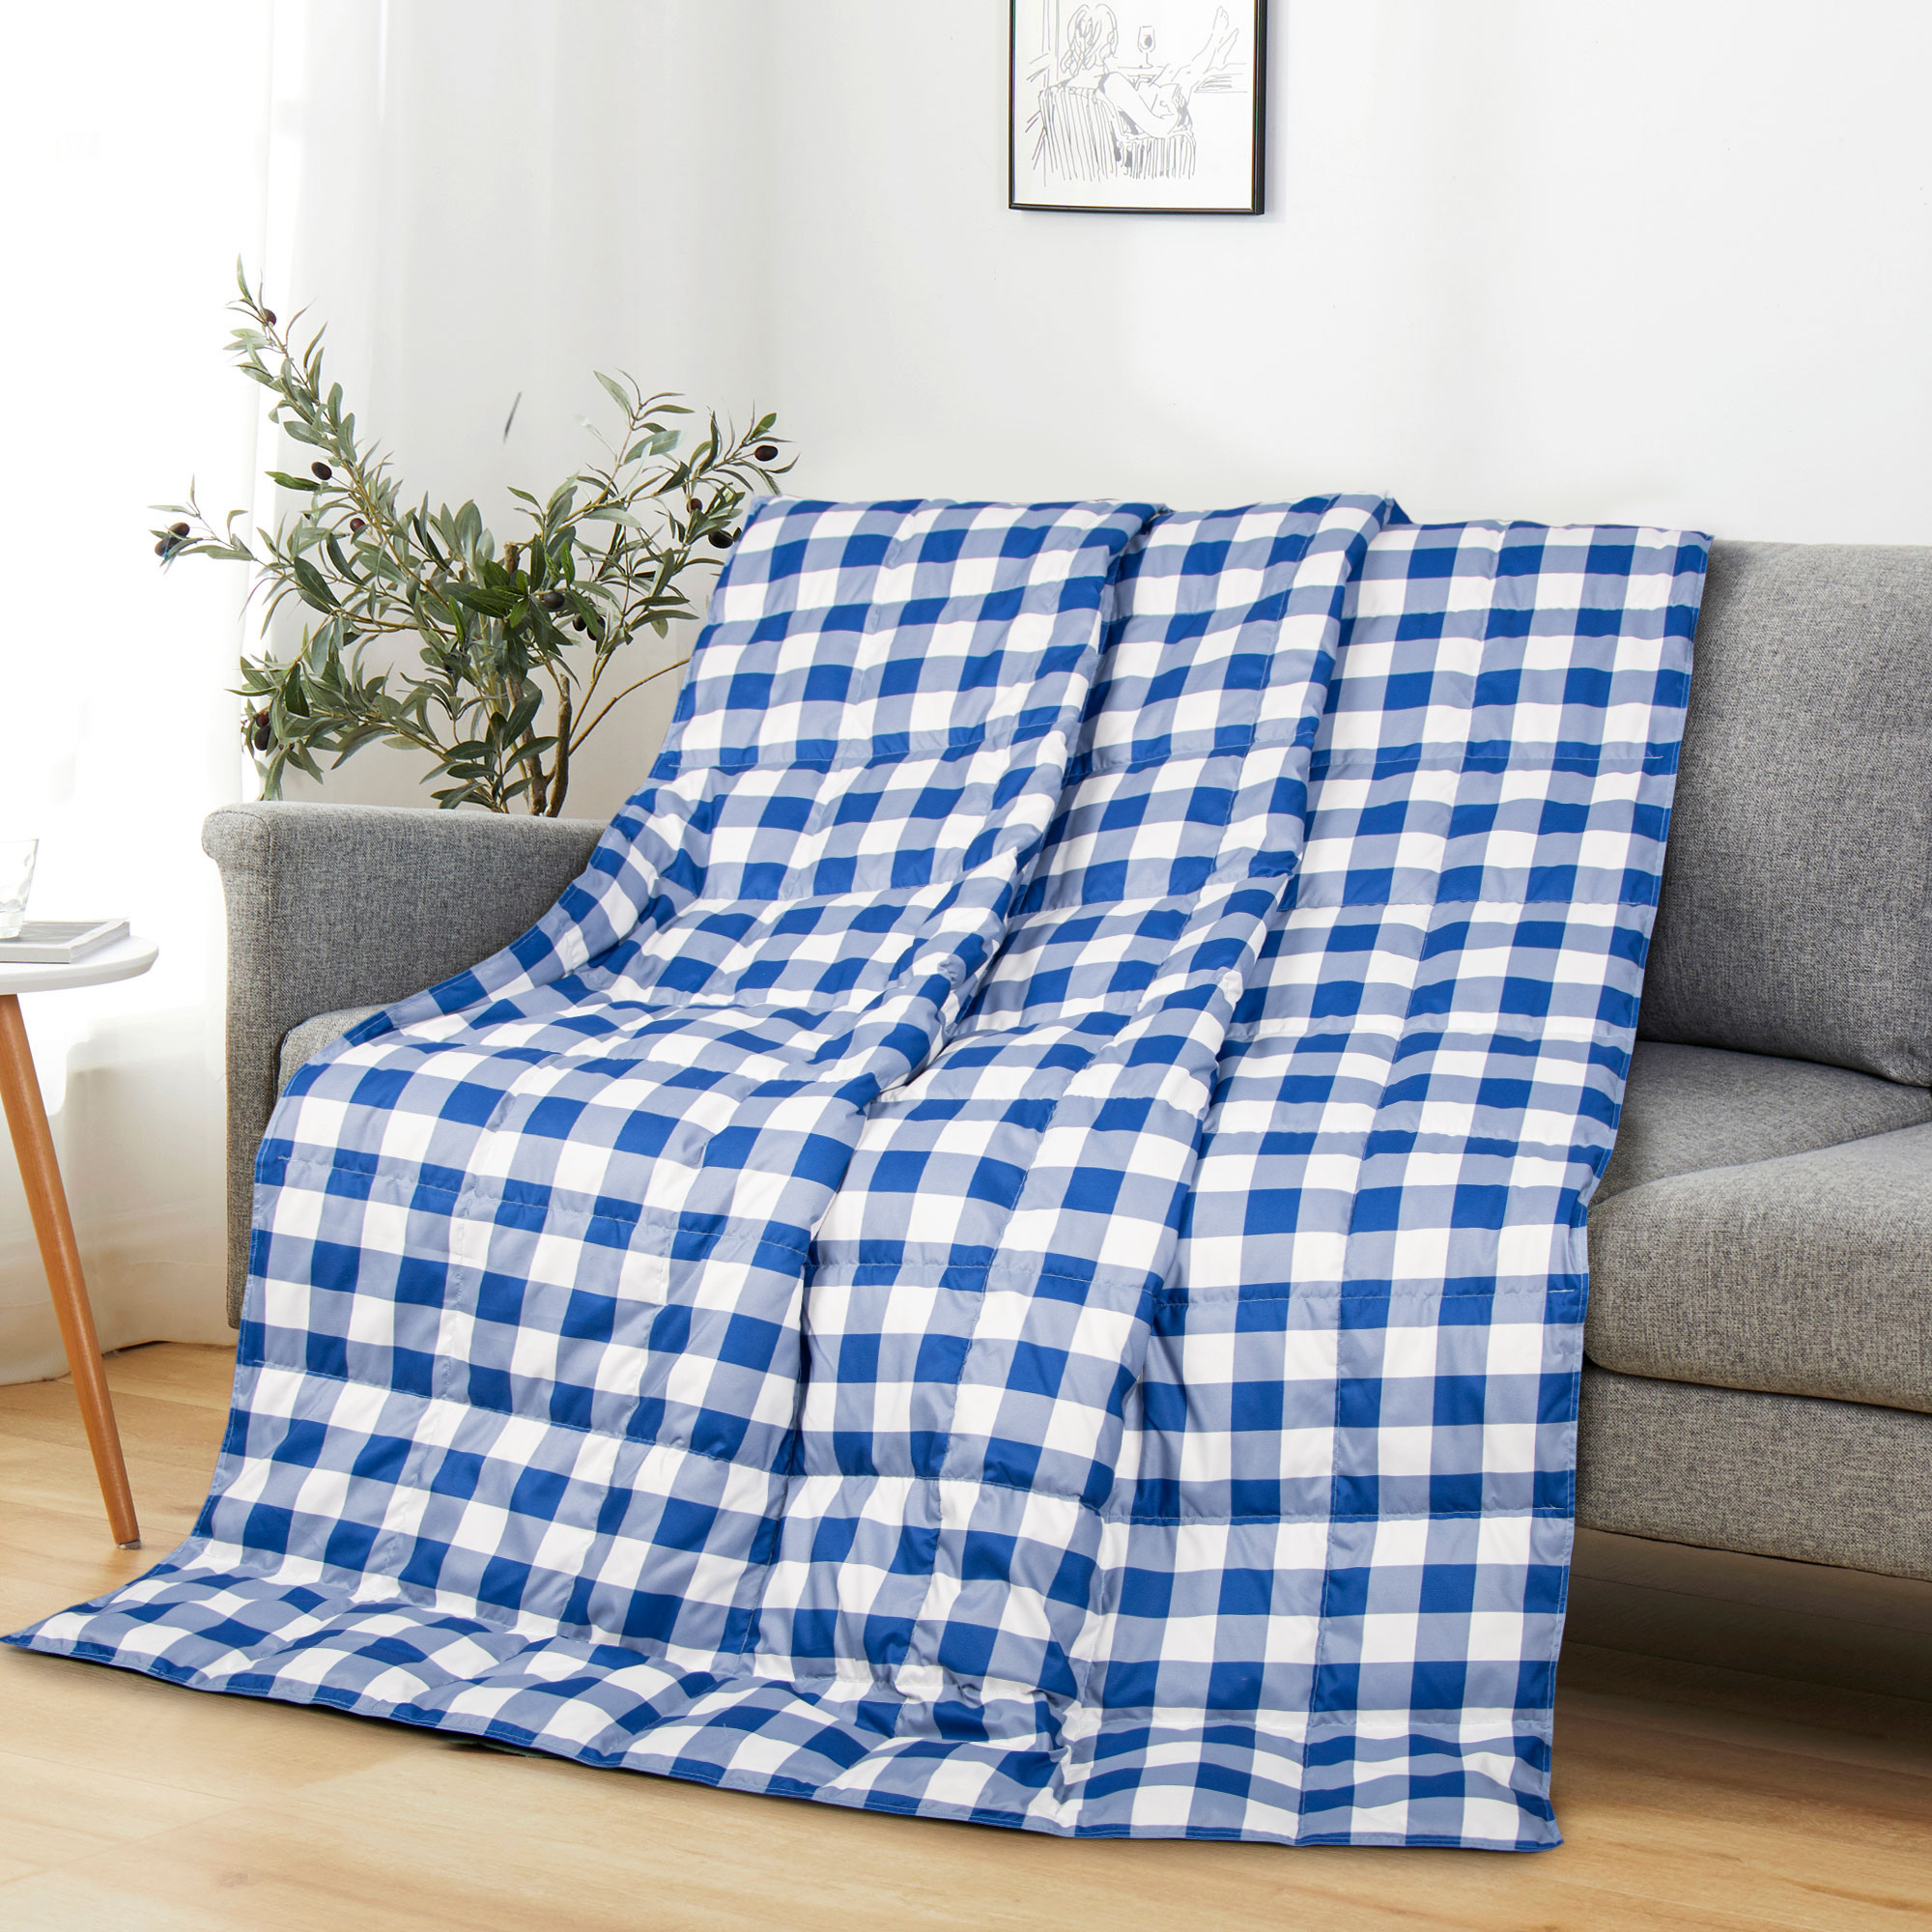 Luxury All Season Down Blanket With Ultra Soft Peach Skin Fabric, Cozy Throw Blanket, 50x70